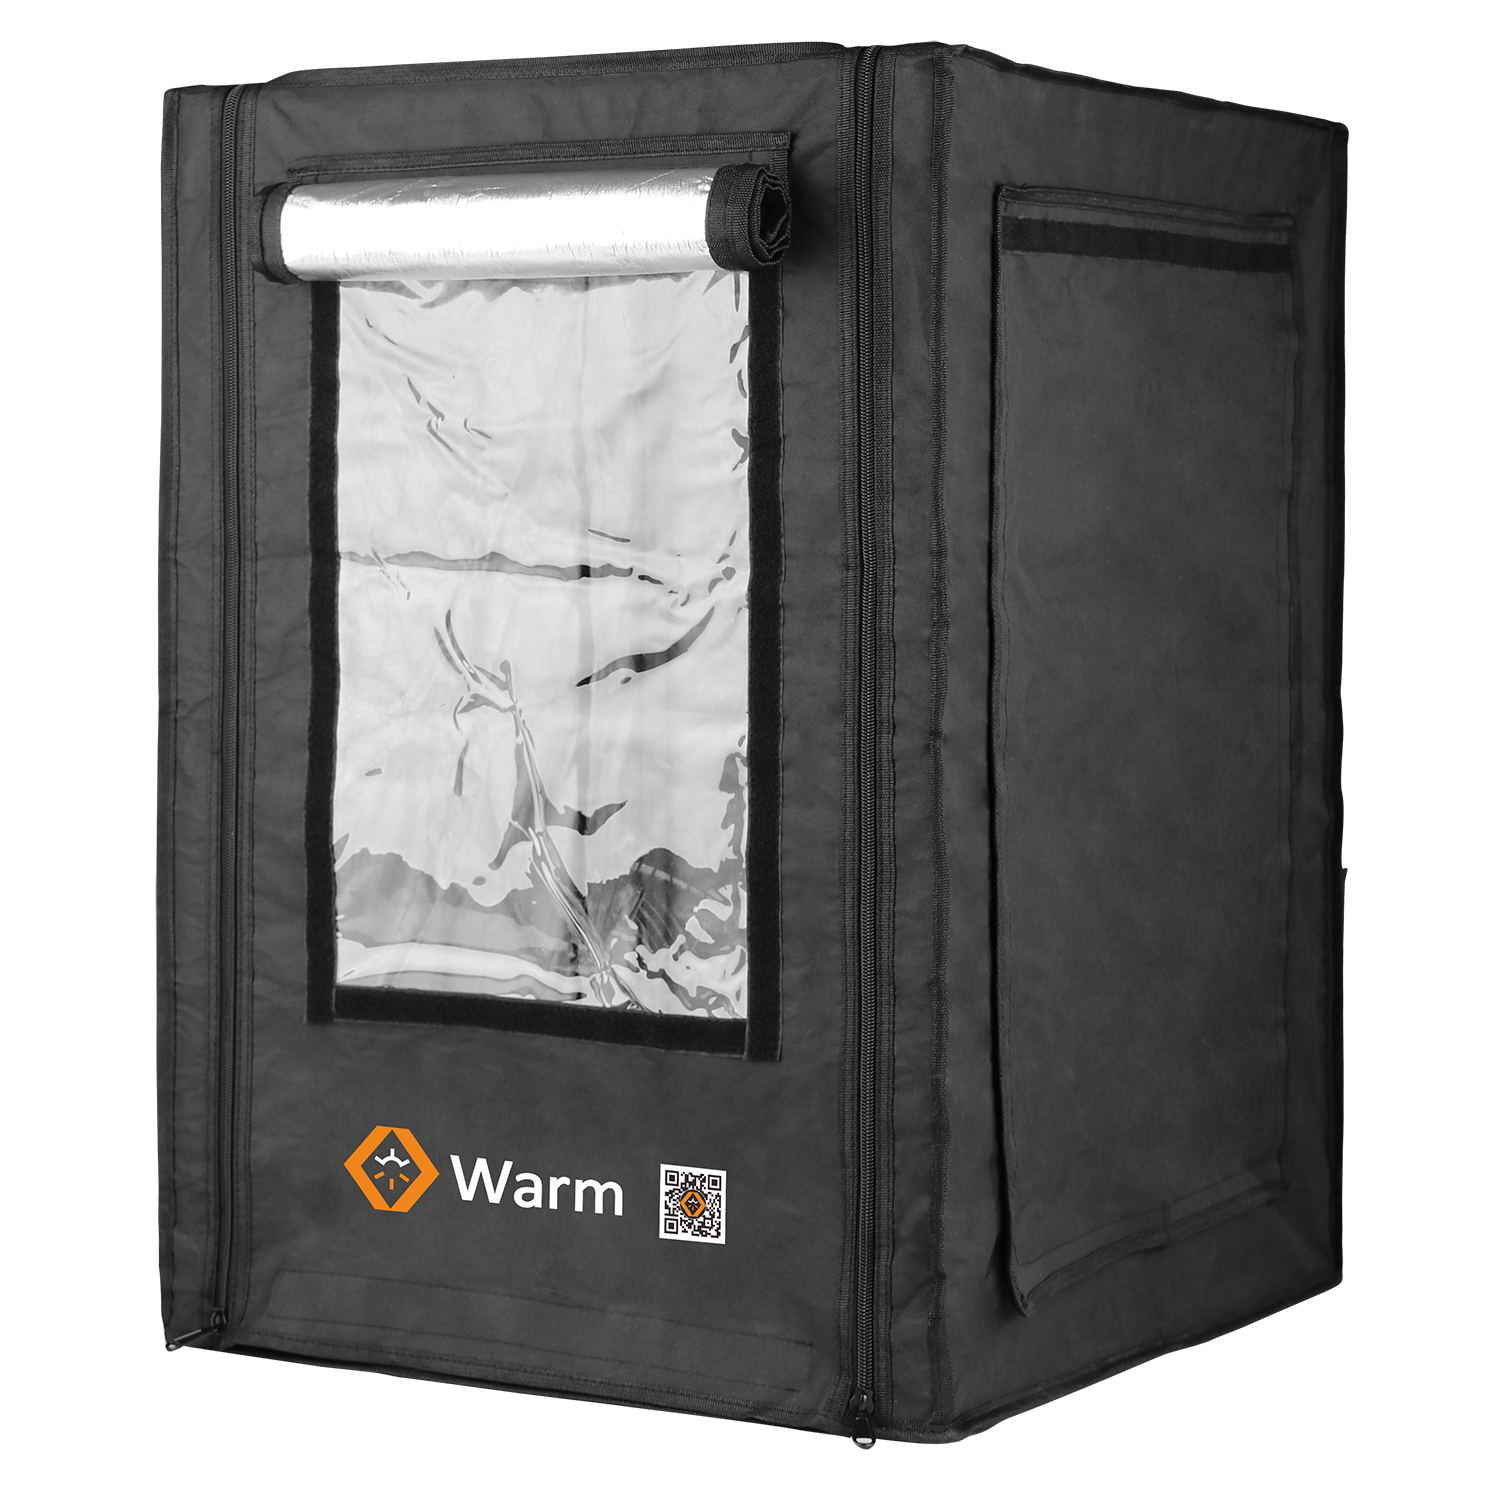 Max 3D Printer Enclosure, Keep Warm, Flame Retardant, Full Coverage, and a Studio, Warm Max